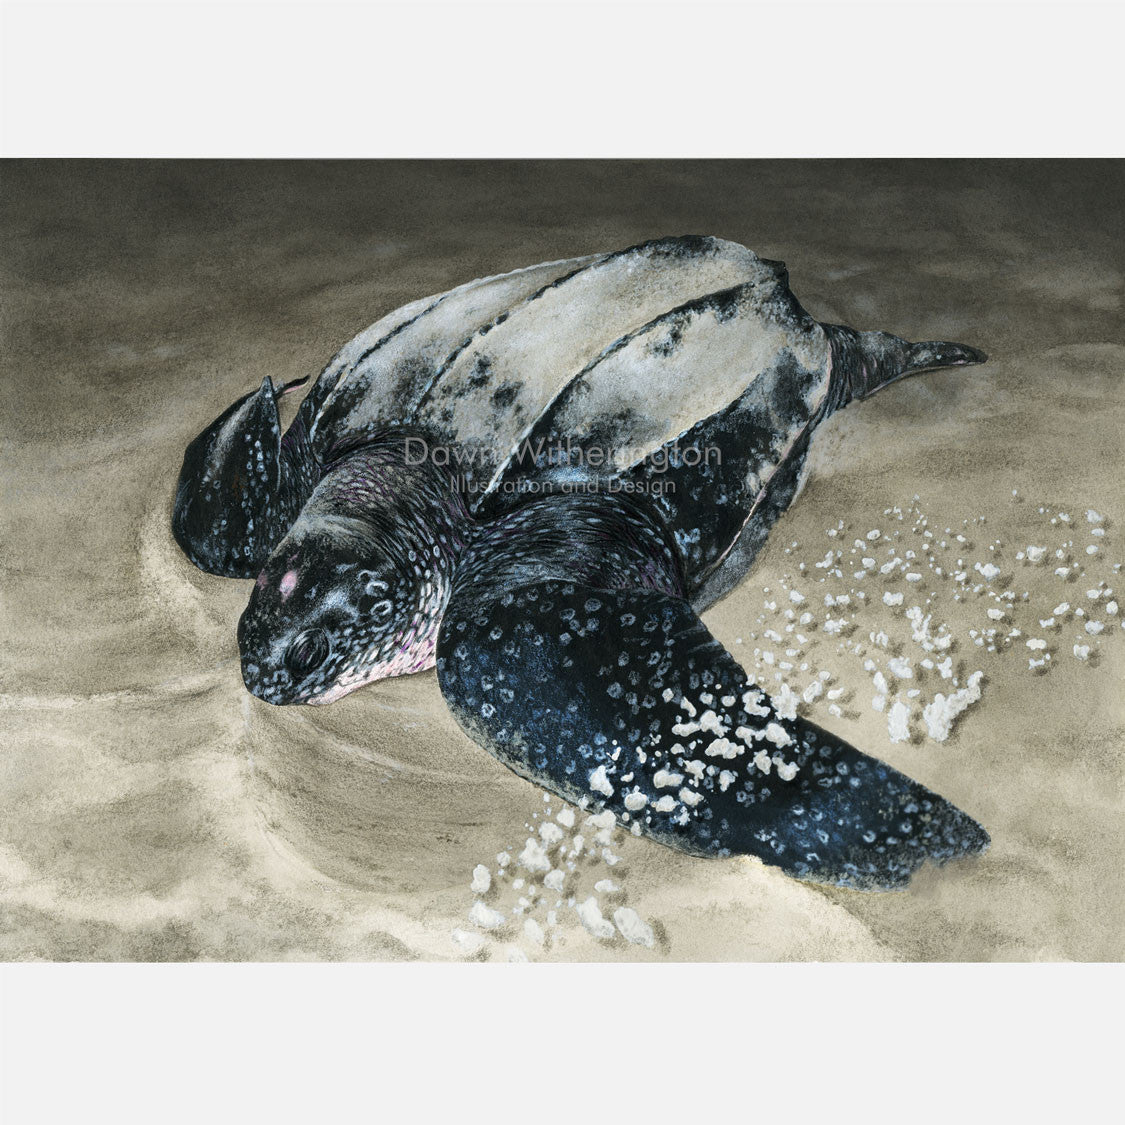 This beautiful illustration is of a nesting leatherback sea turtle, Dermochelys coriacea, on a Florida beach.